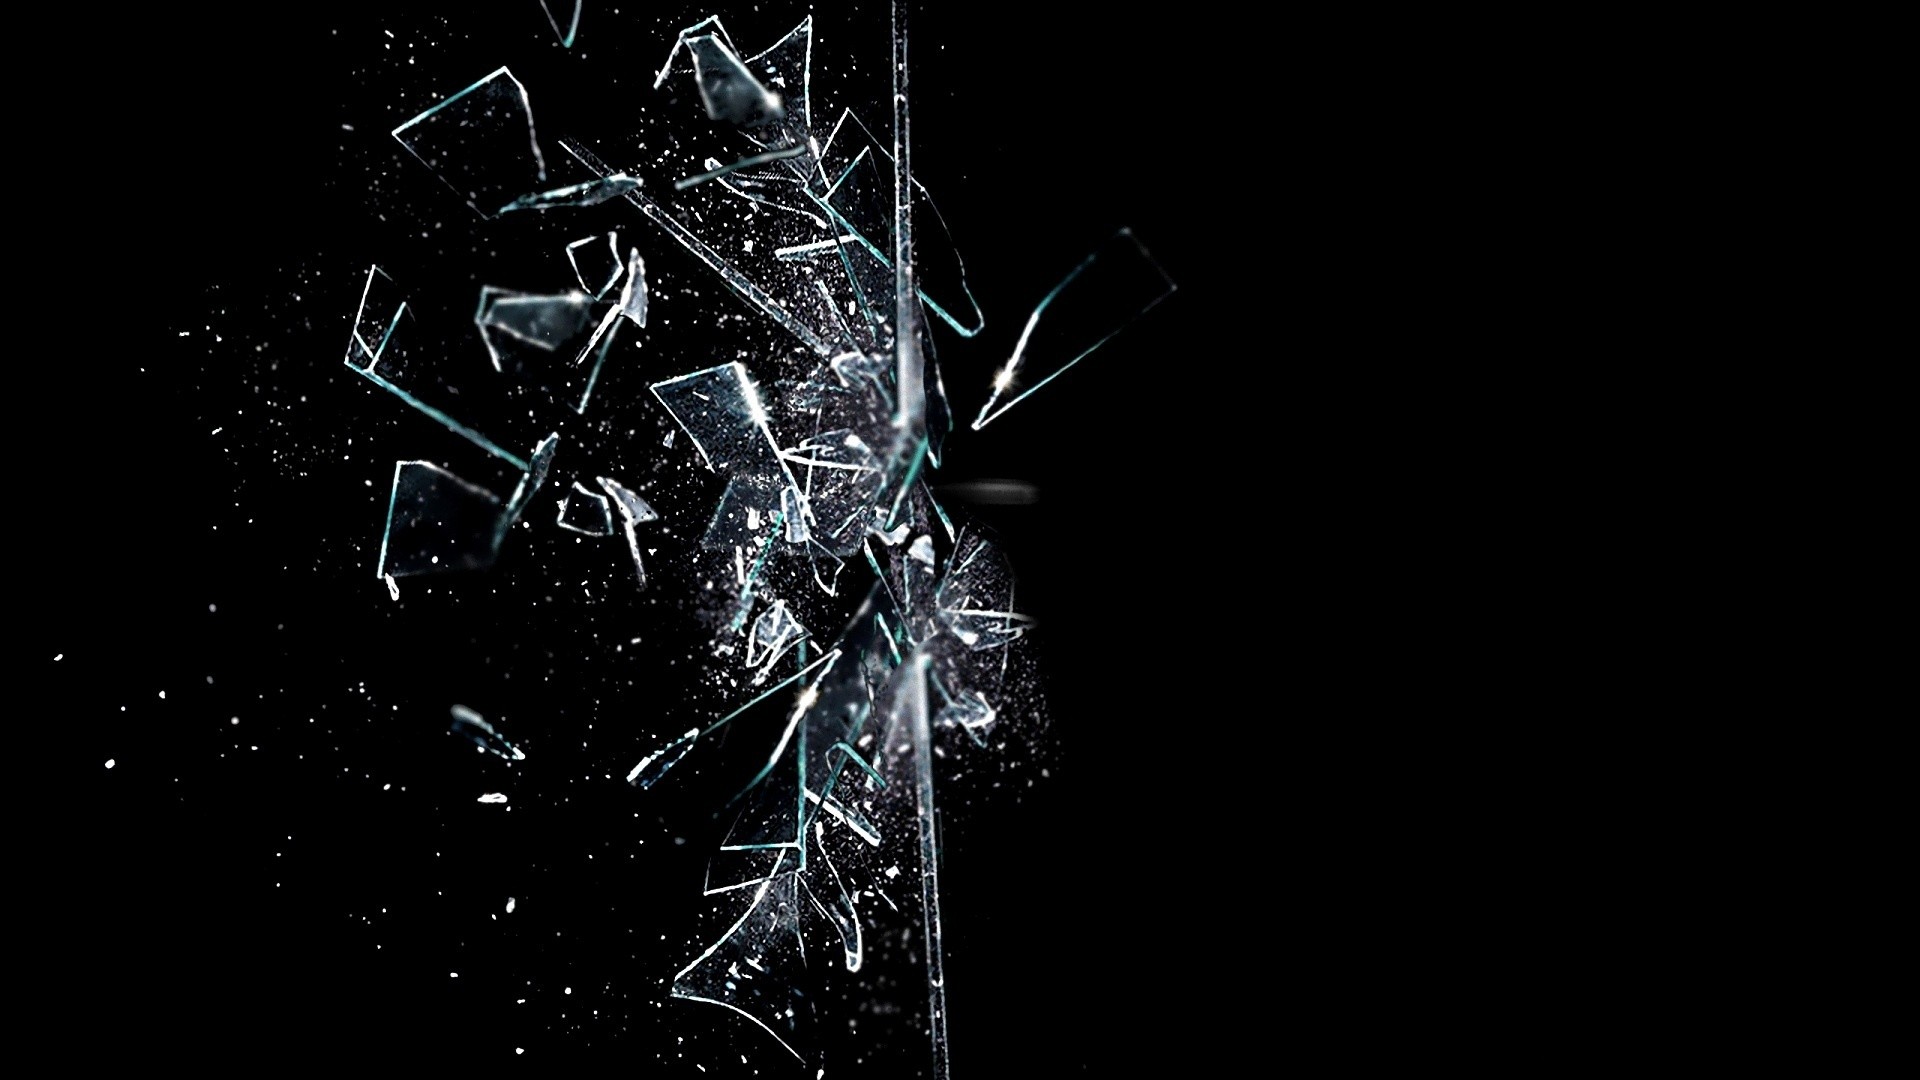 70+] Broken Glass Background - WallpaperSafari